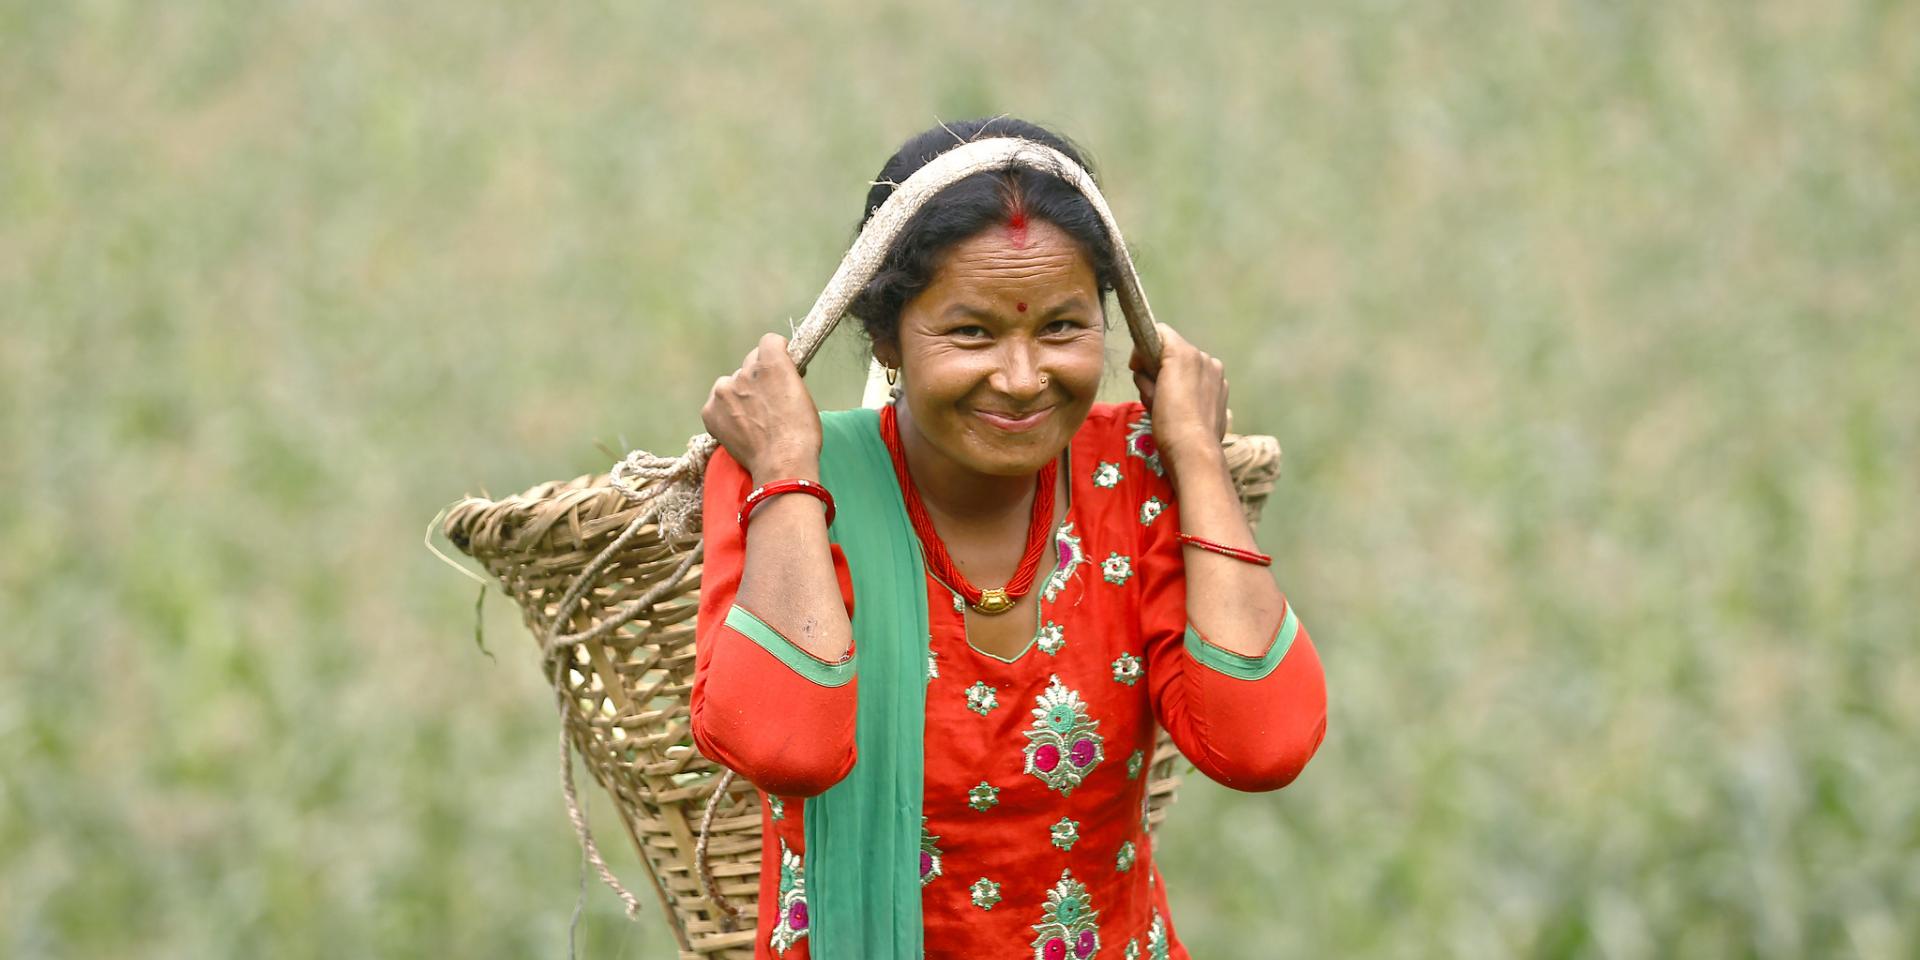 Nepal - Joint Programme for Rural Women Farmers.